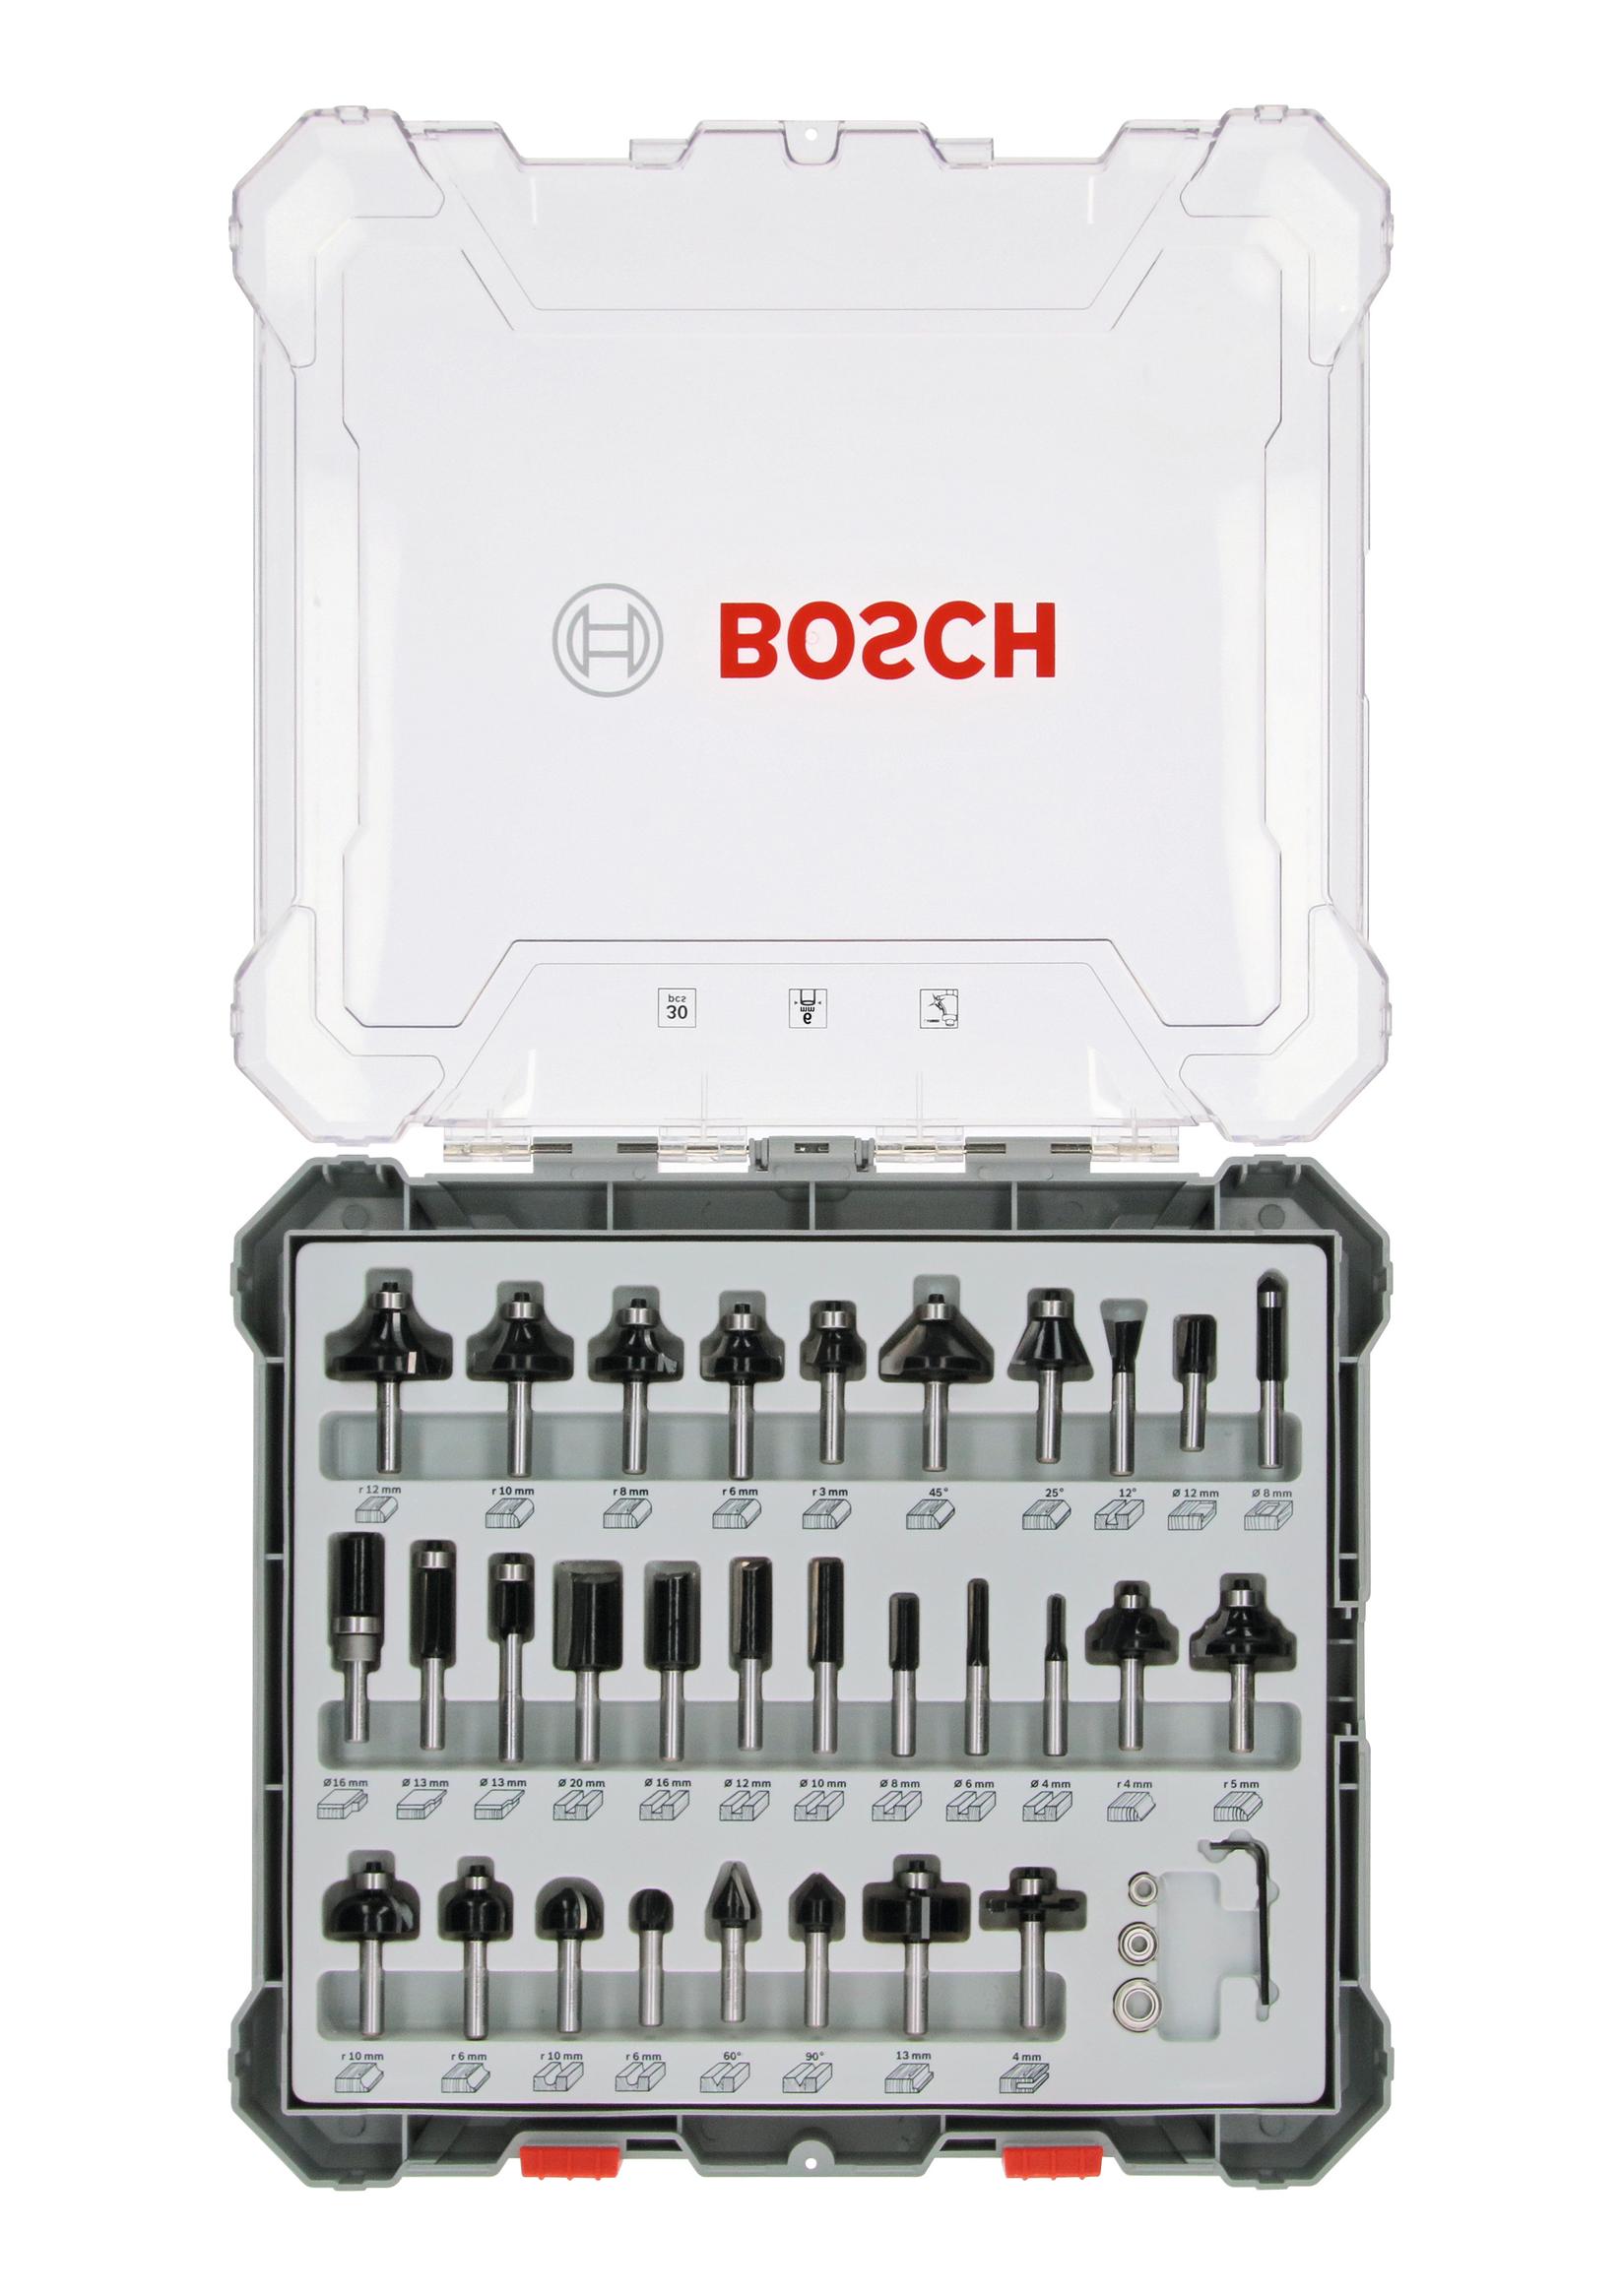 Bosch Komplet raznih glodala, 30 komada, držač od 6 mm 2607017474, 30-piece Mixed Application Router Bit Set.